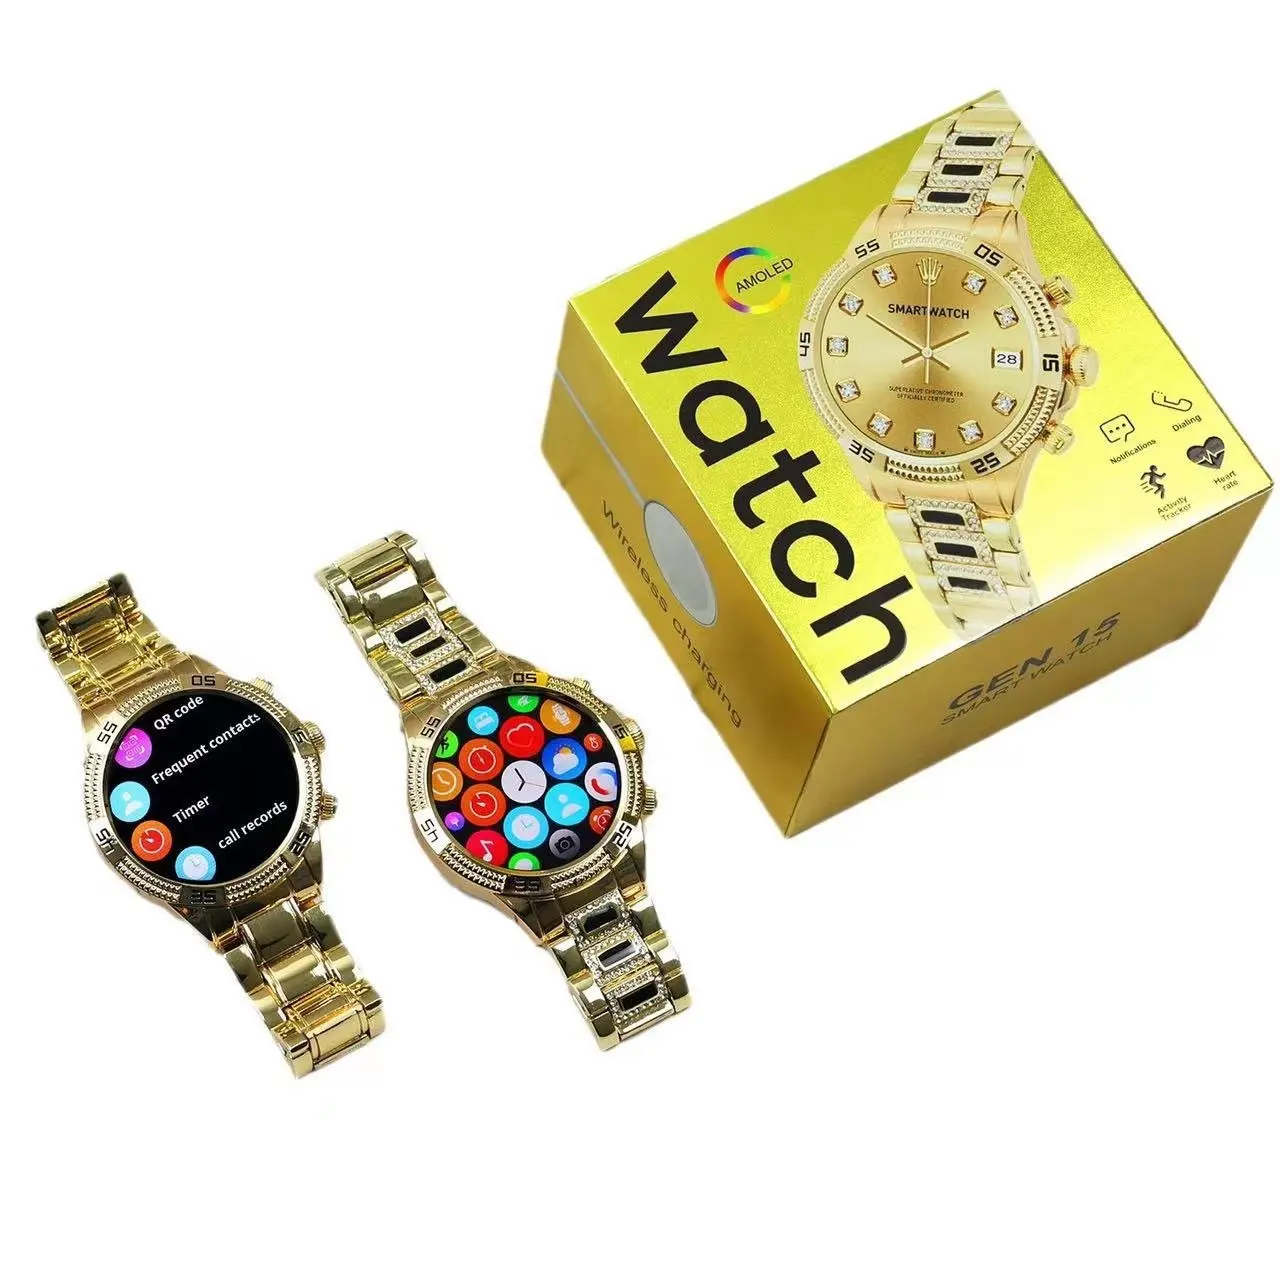 Offres Spéciales Gen 15 montre intelligente couleur or luxe 1.3 pouces Amoled Smartwatch rond or Fitness Tracker reloj inteligente